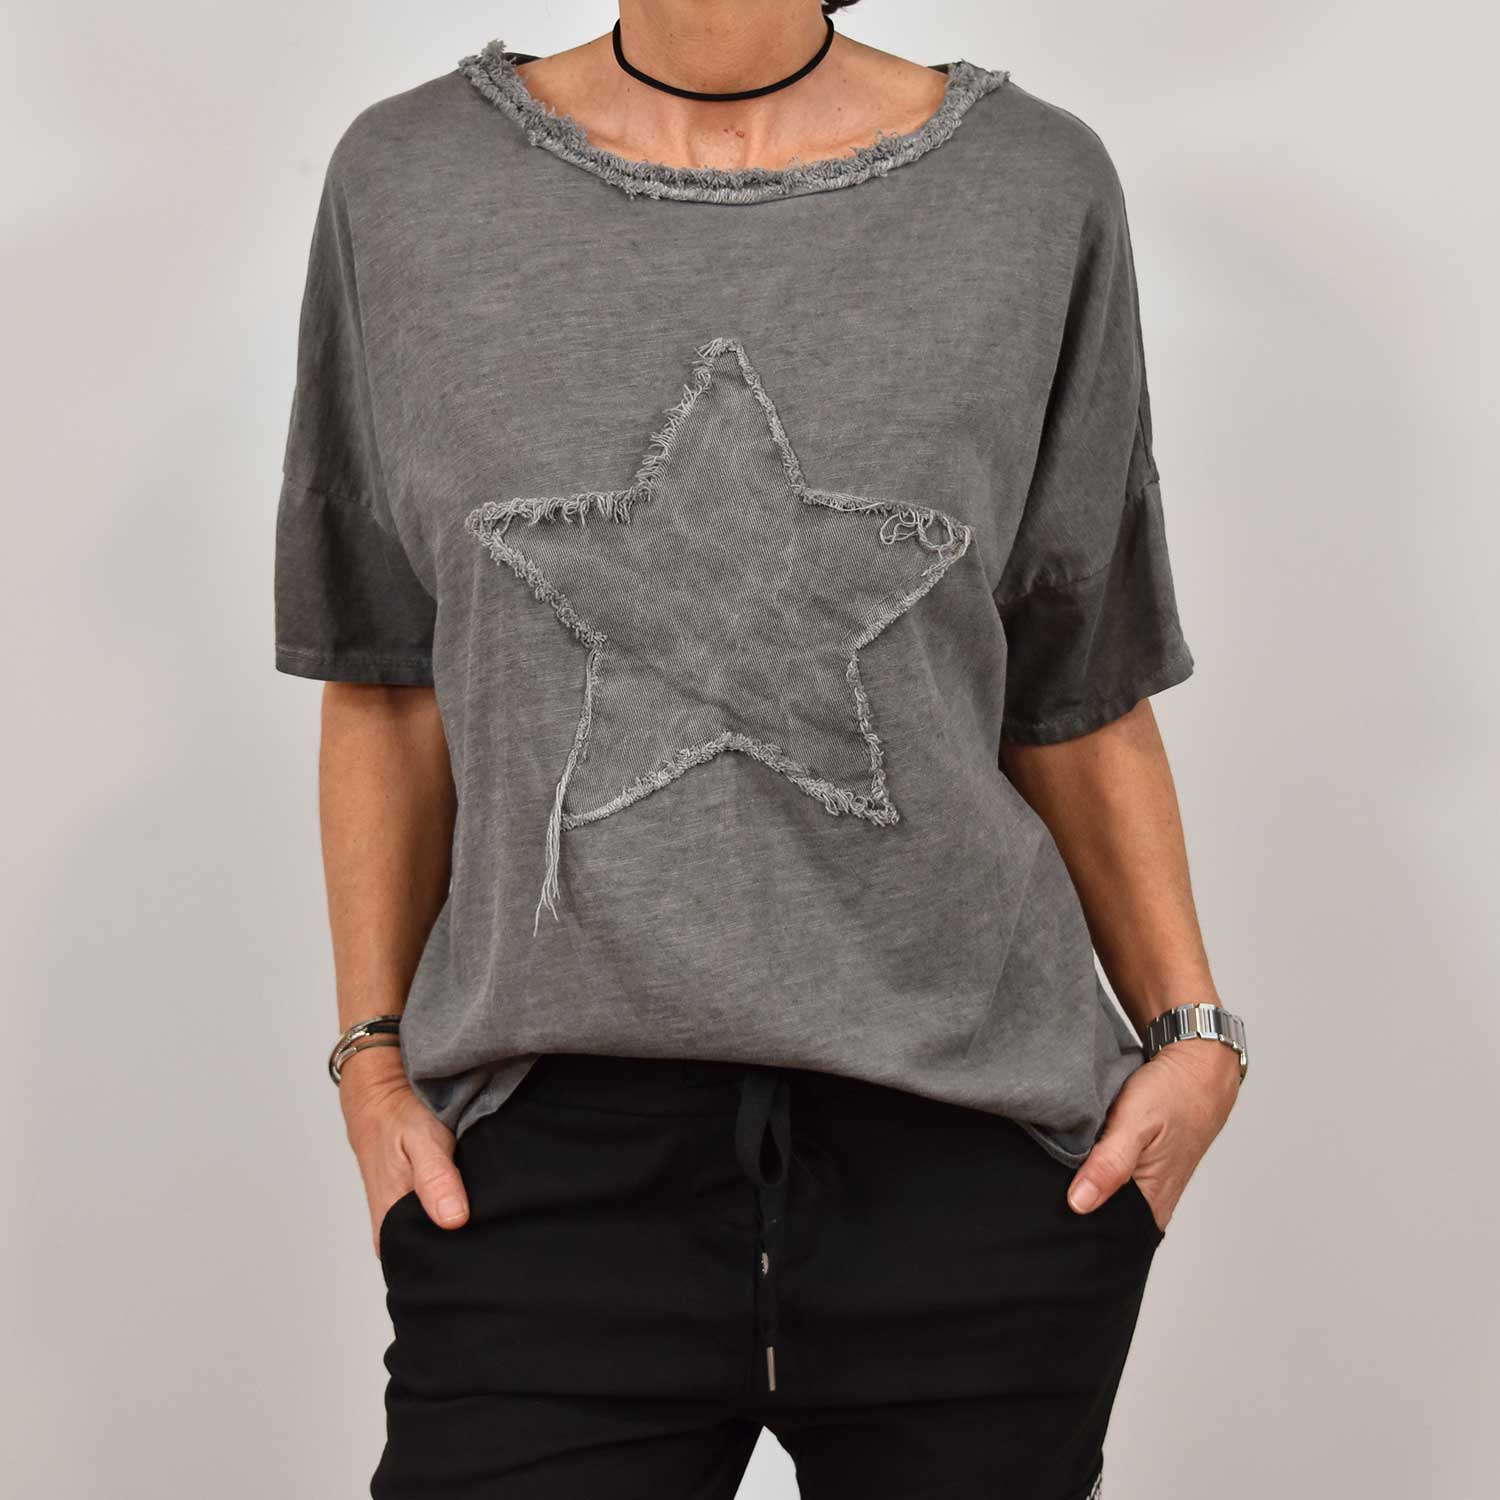 Camiseta estrella flecos gris